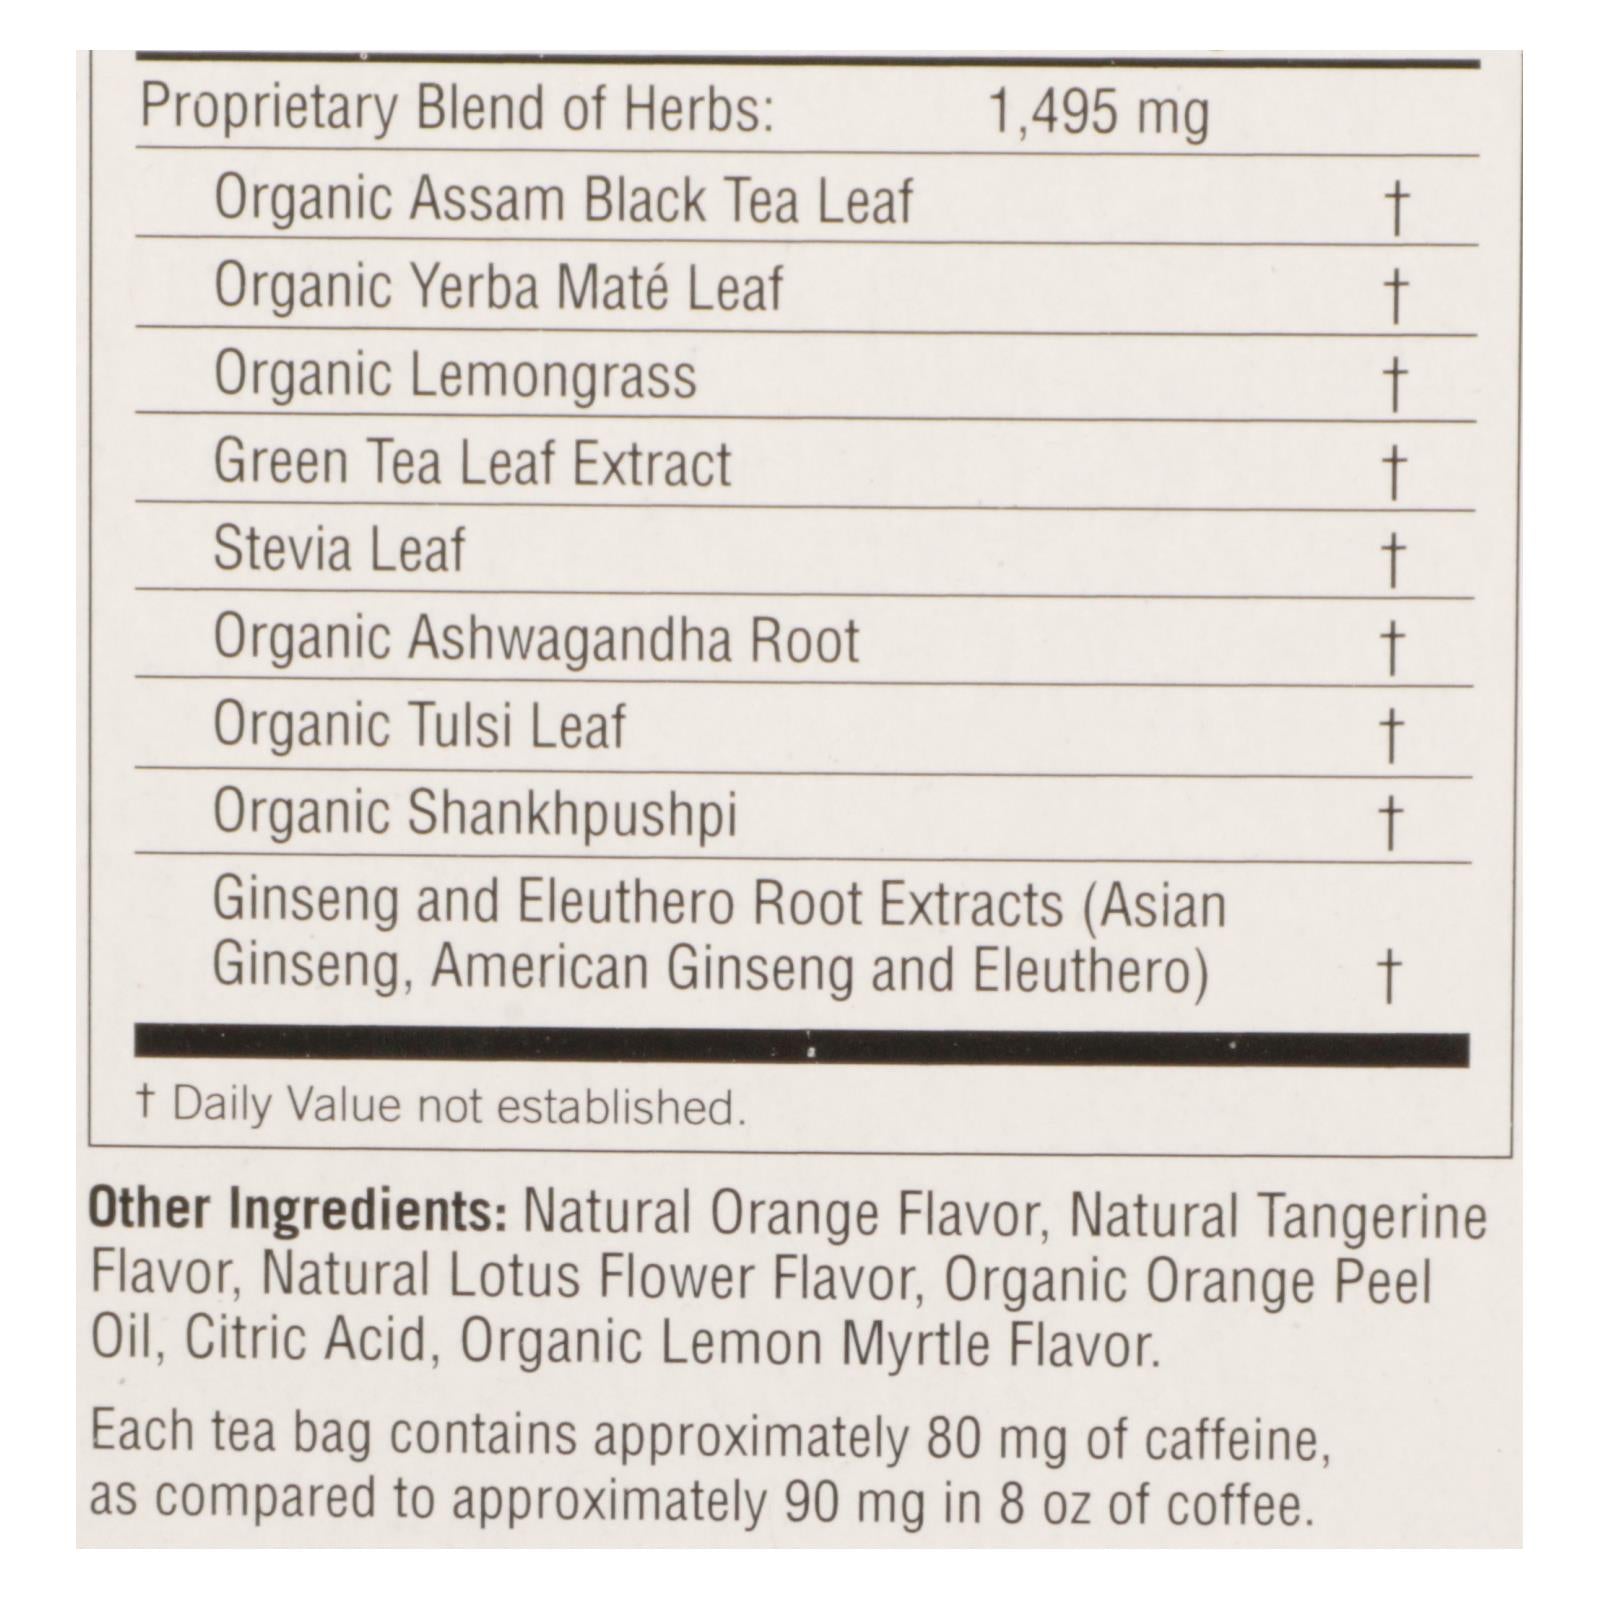 Yogi Positive Energy Herbal Tea Sweet Tangerine - 16 Tea Bags - Case Of 6